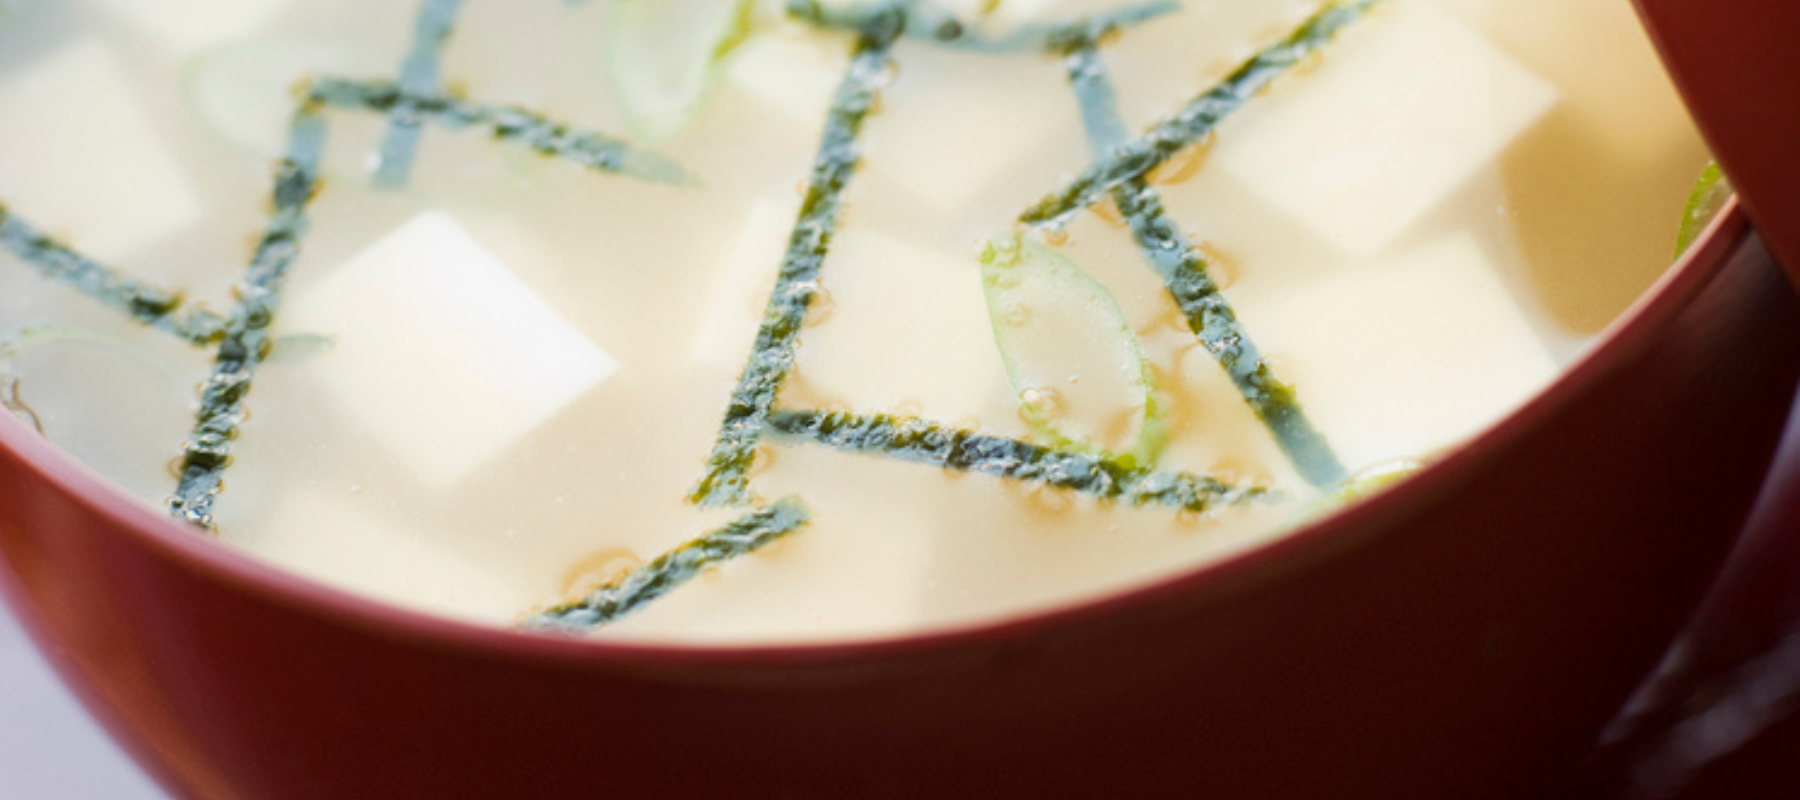 Ginger Miso Soup Recipe for Longevity | Oxford Healthspan